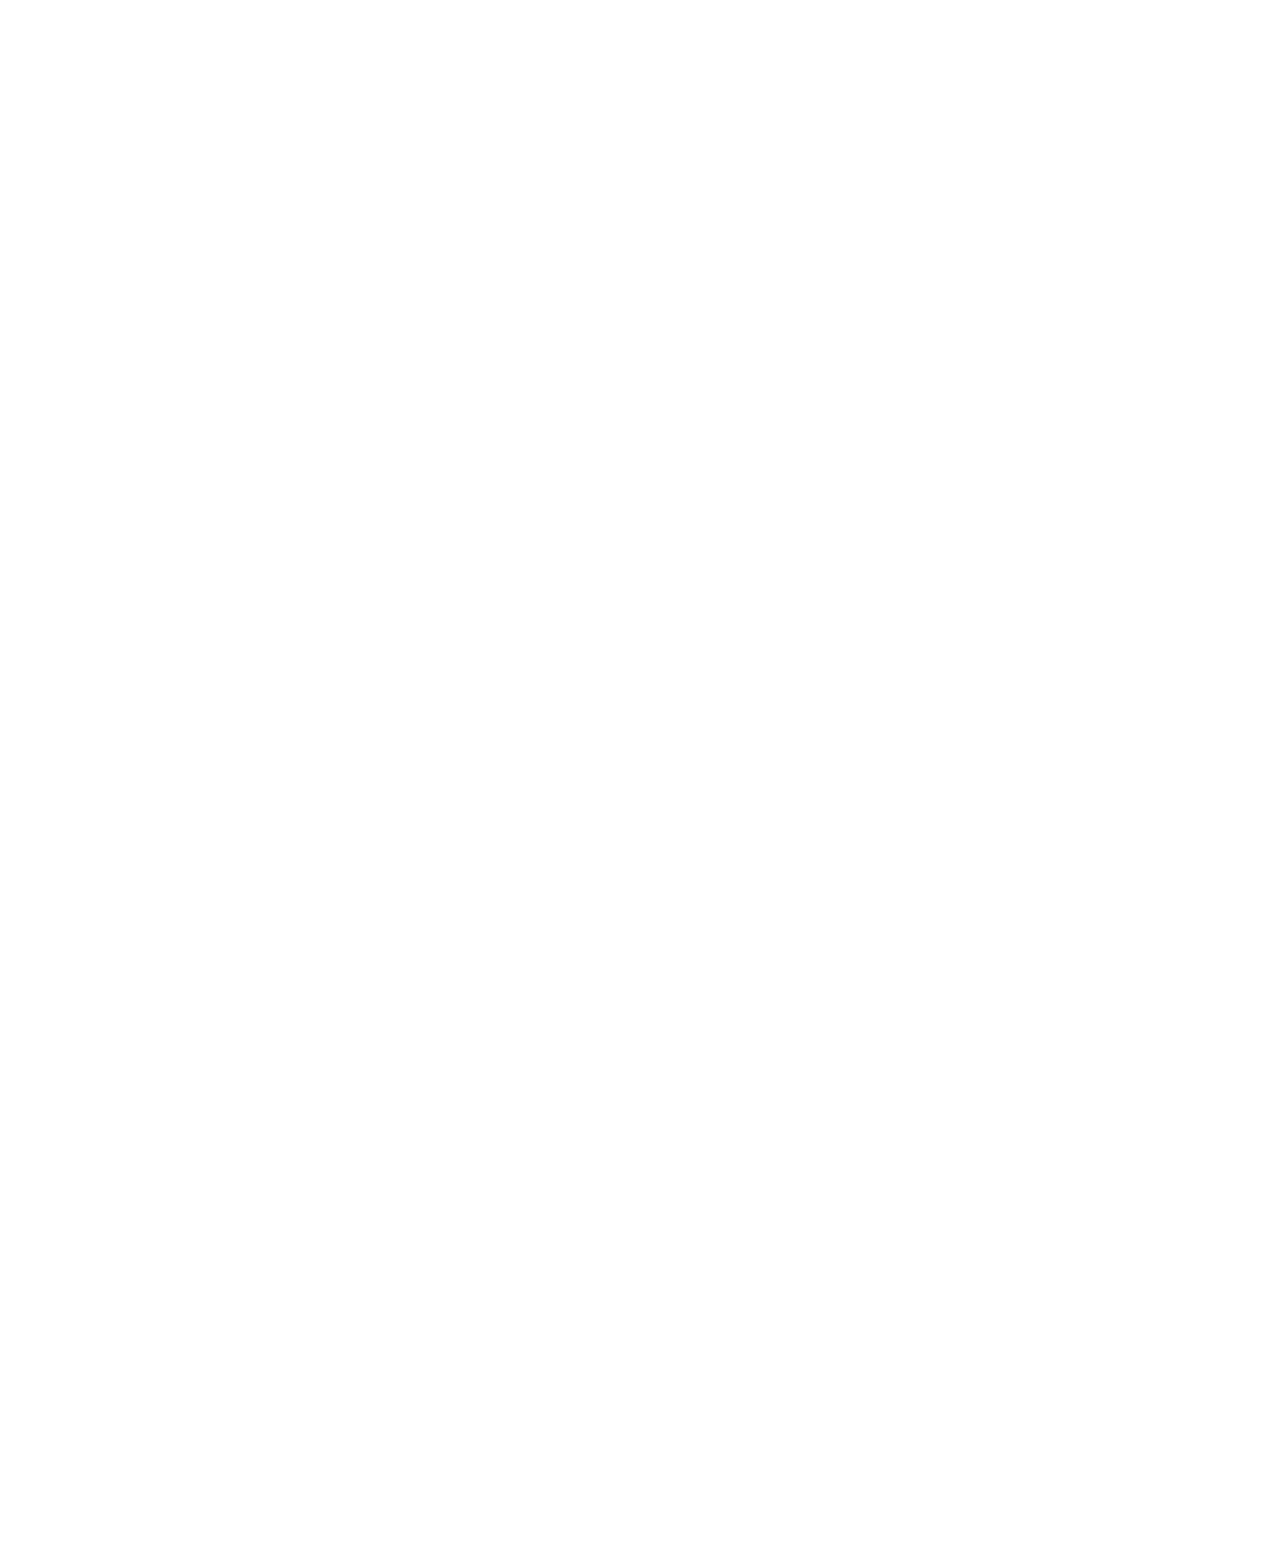 Bureau Veritas logo large for dark backgrounds (transparent PNG)